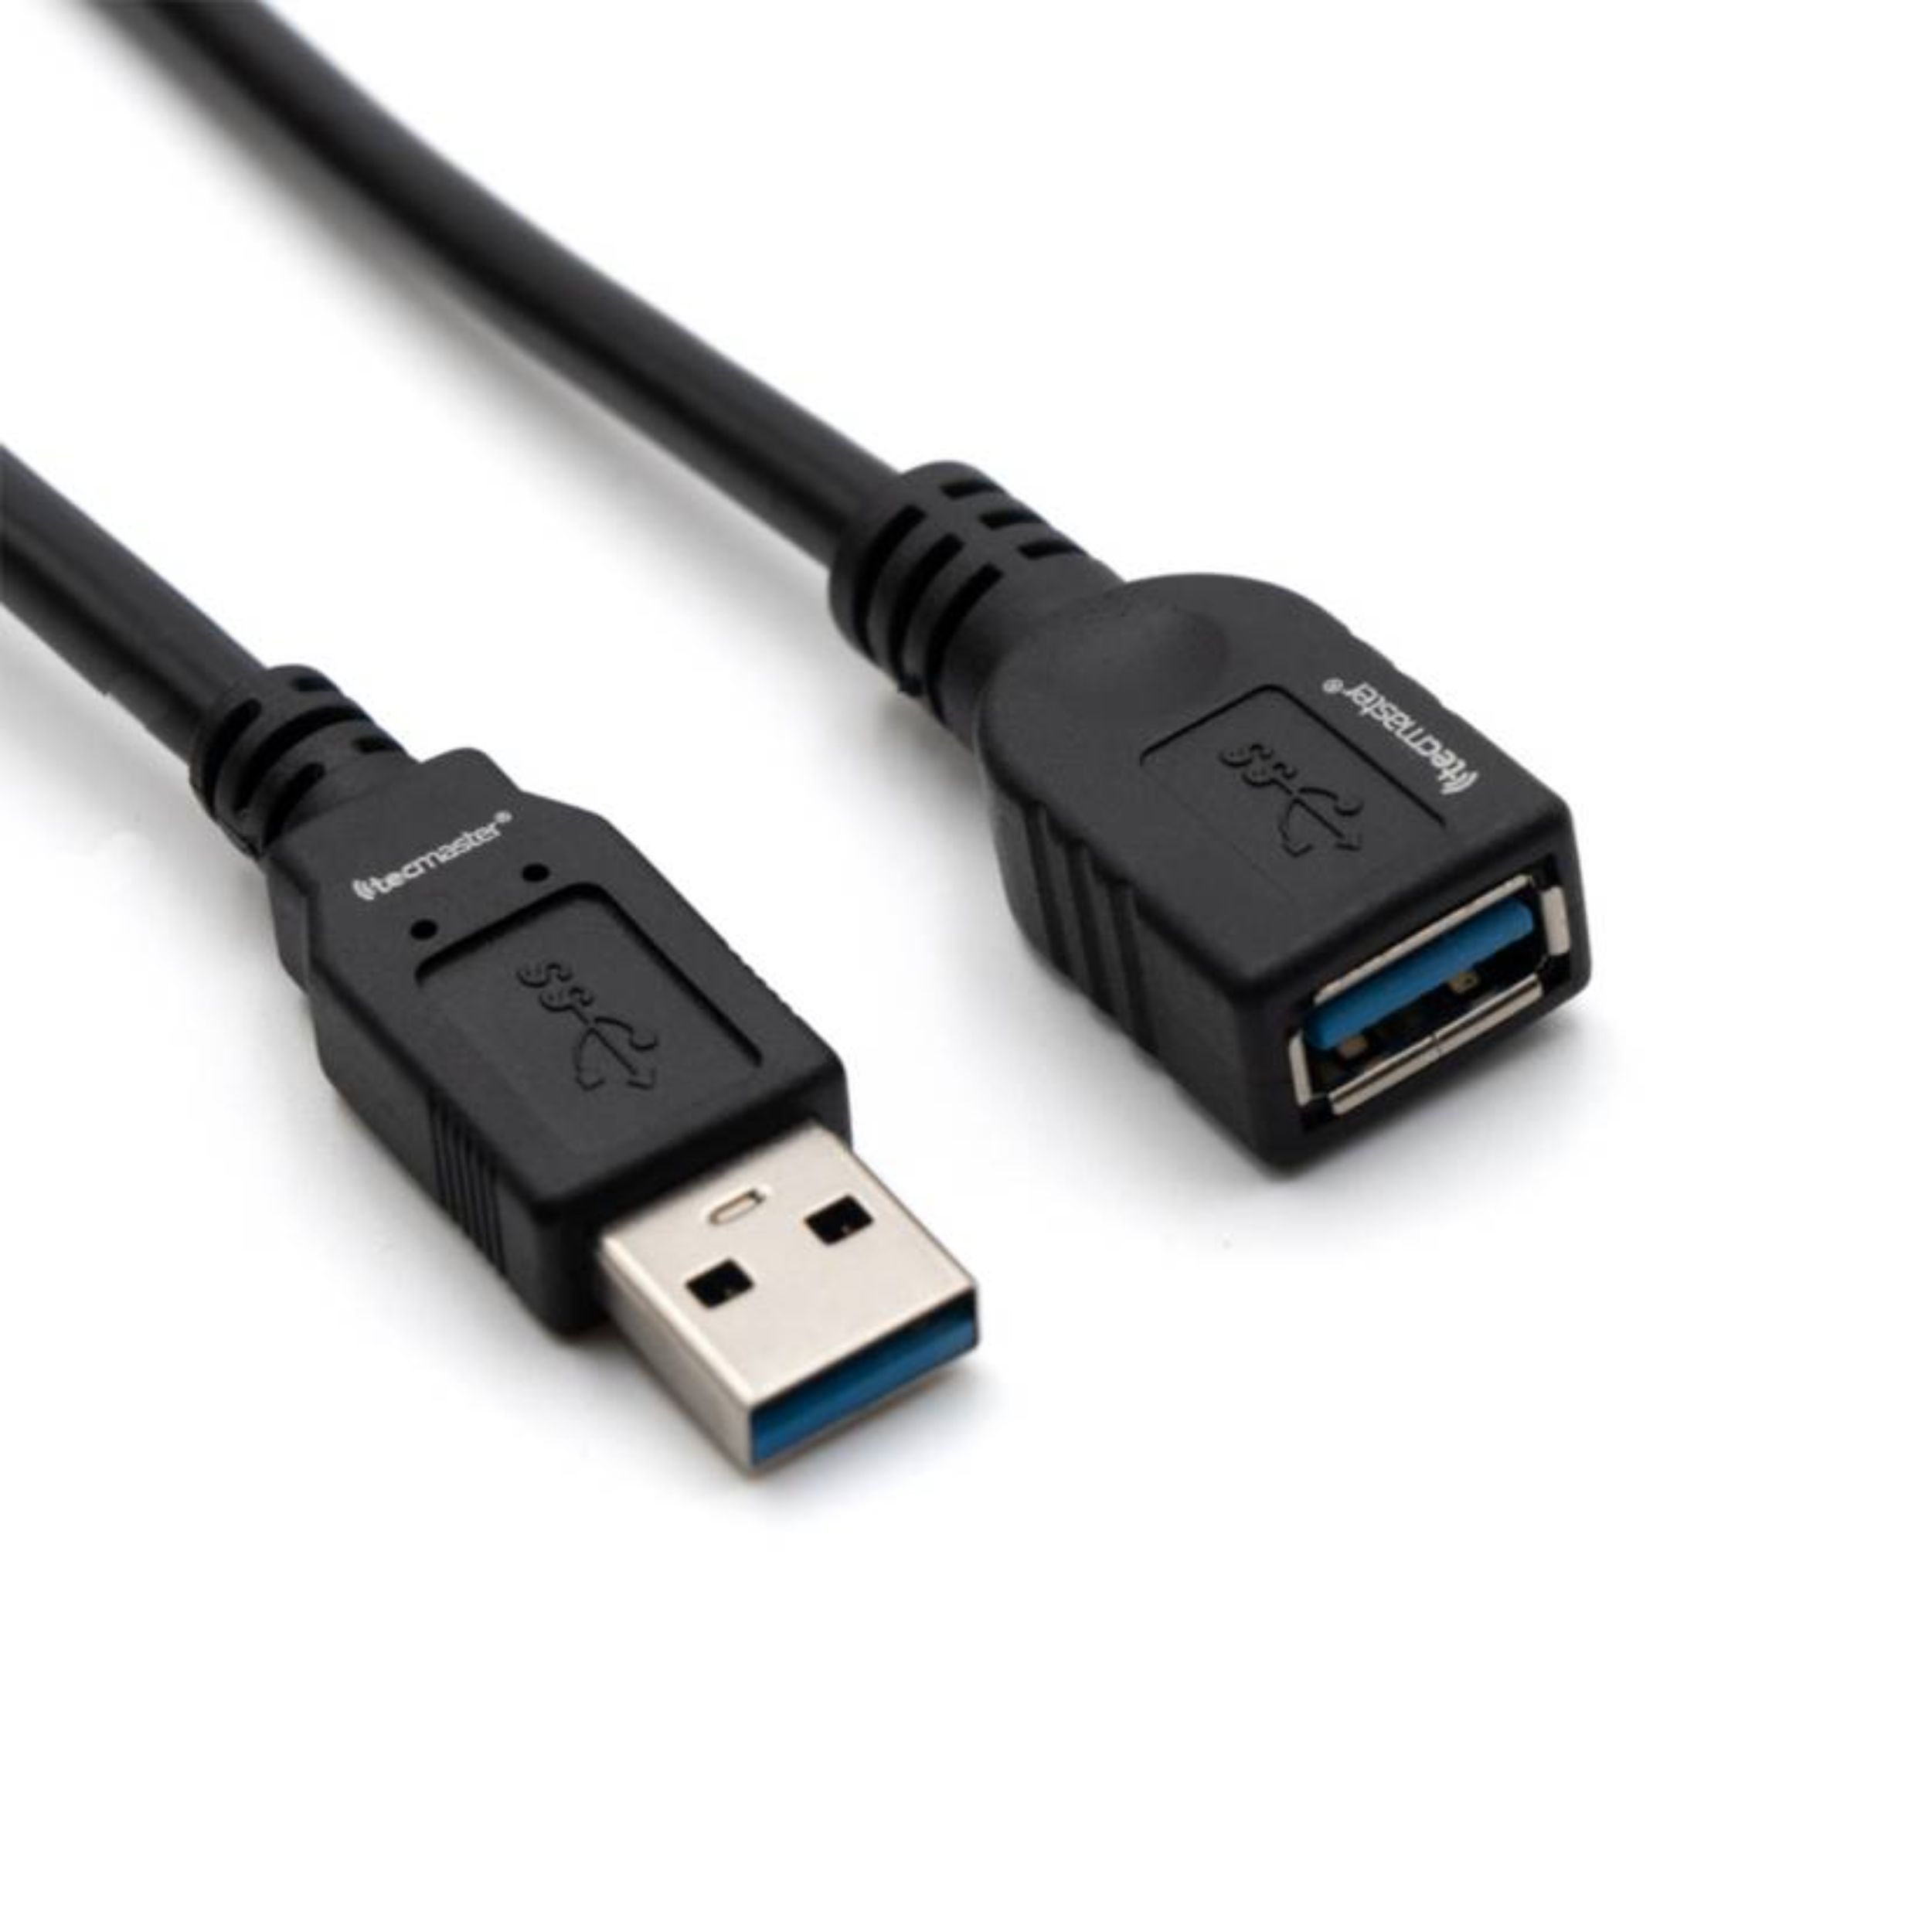 Cable alargador allan 2m - Electrónica Llitt